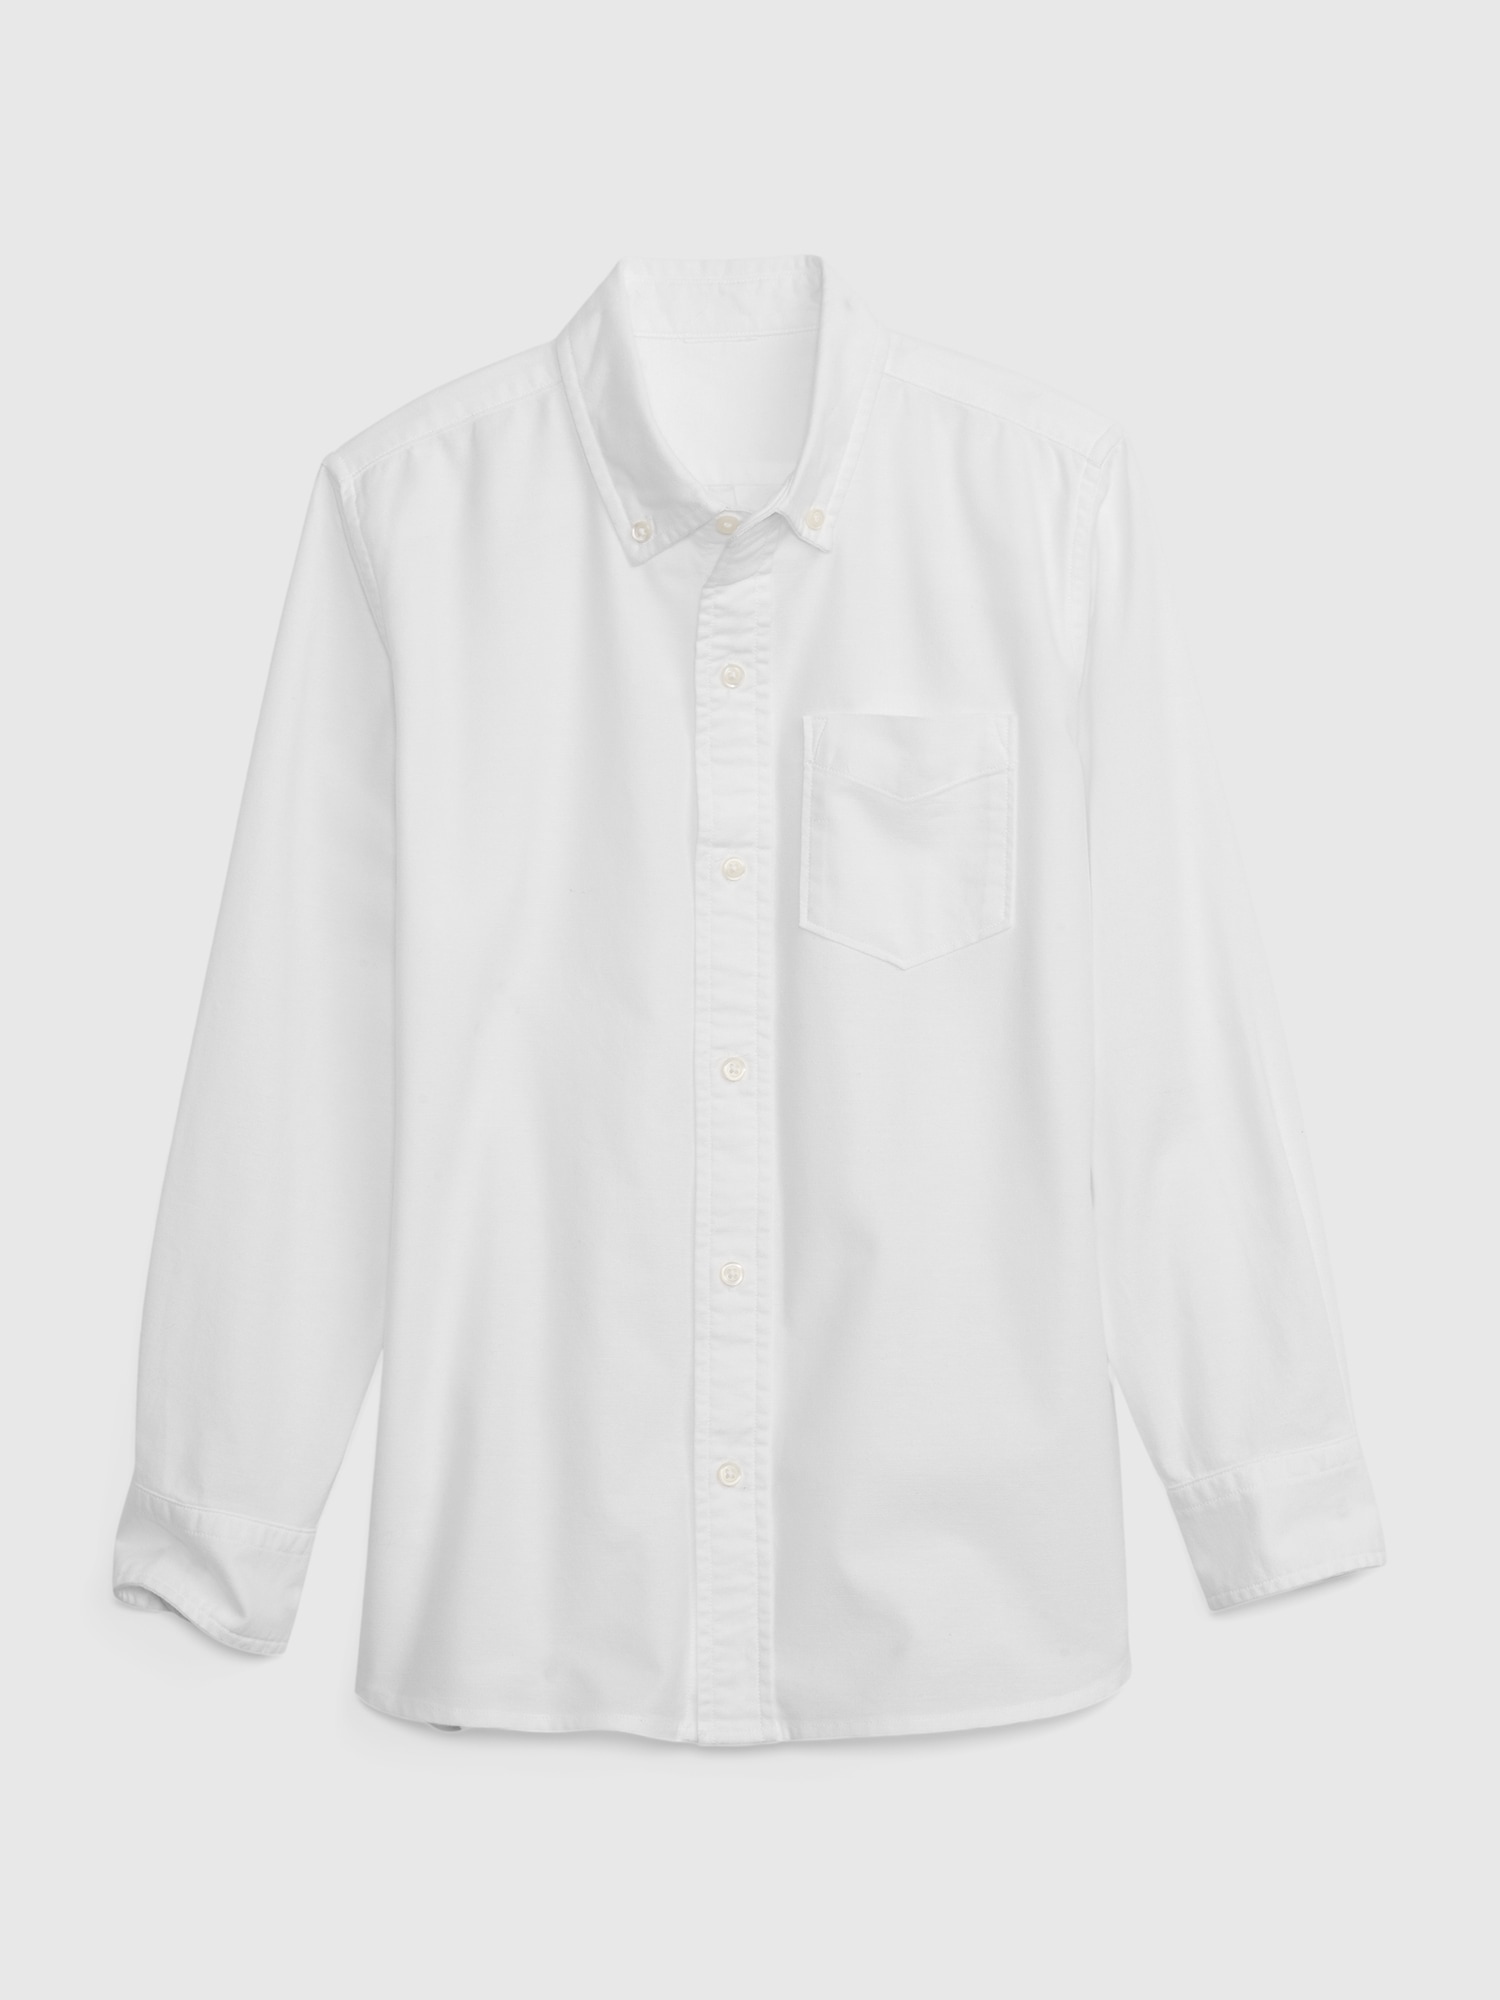 Gap Kids Uniform Oxford Shirt white. 1